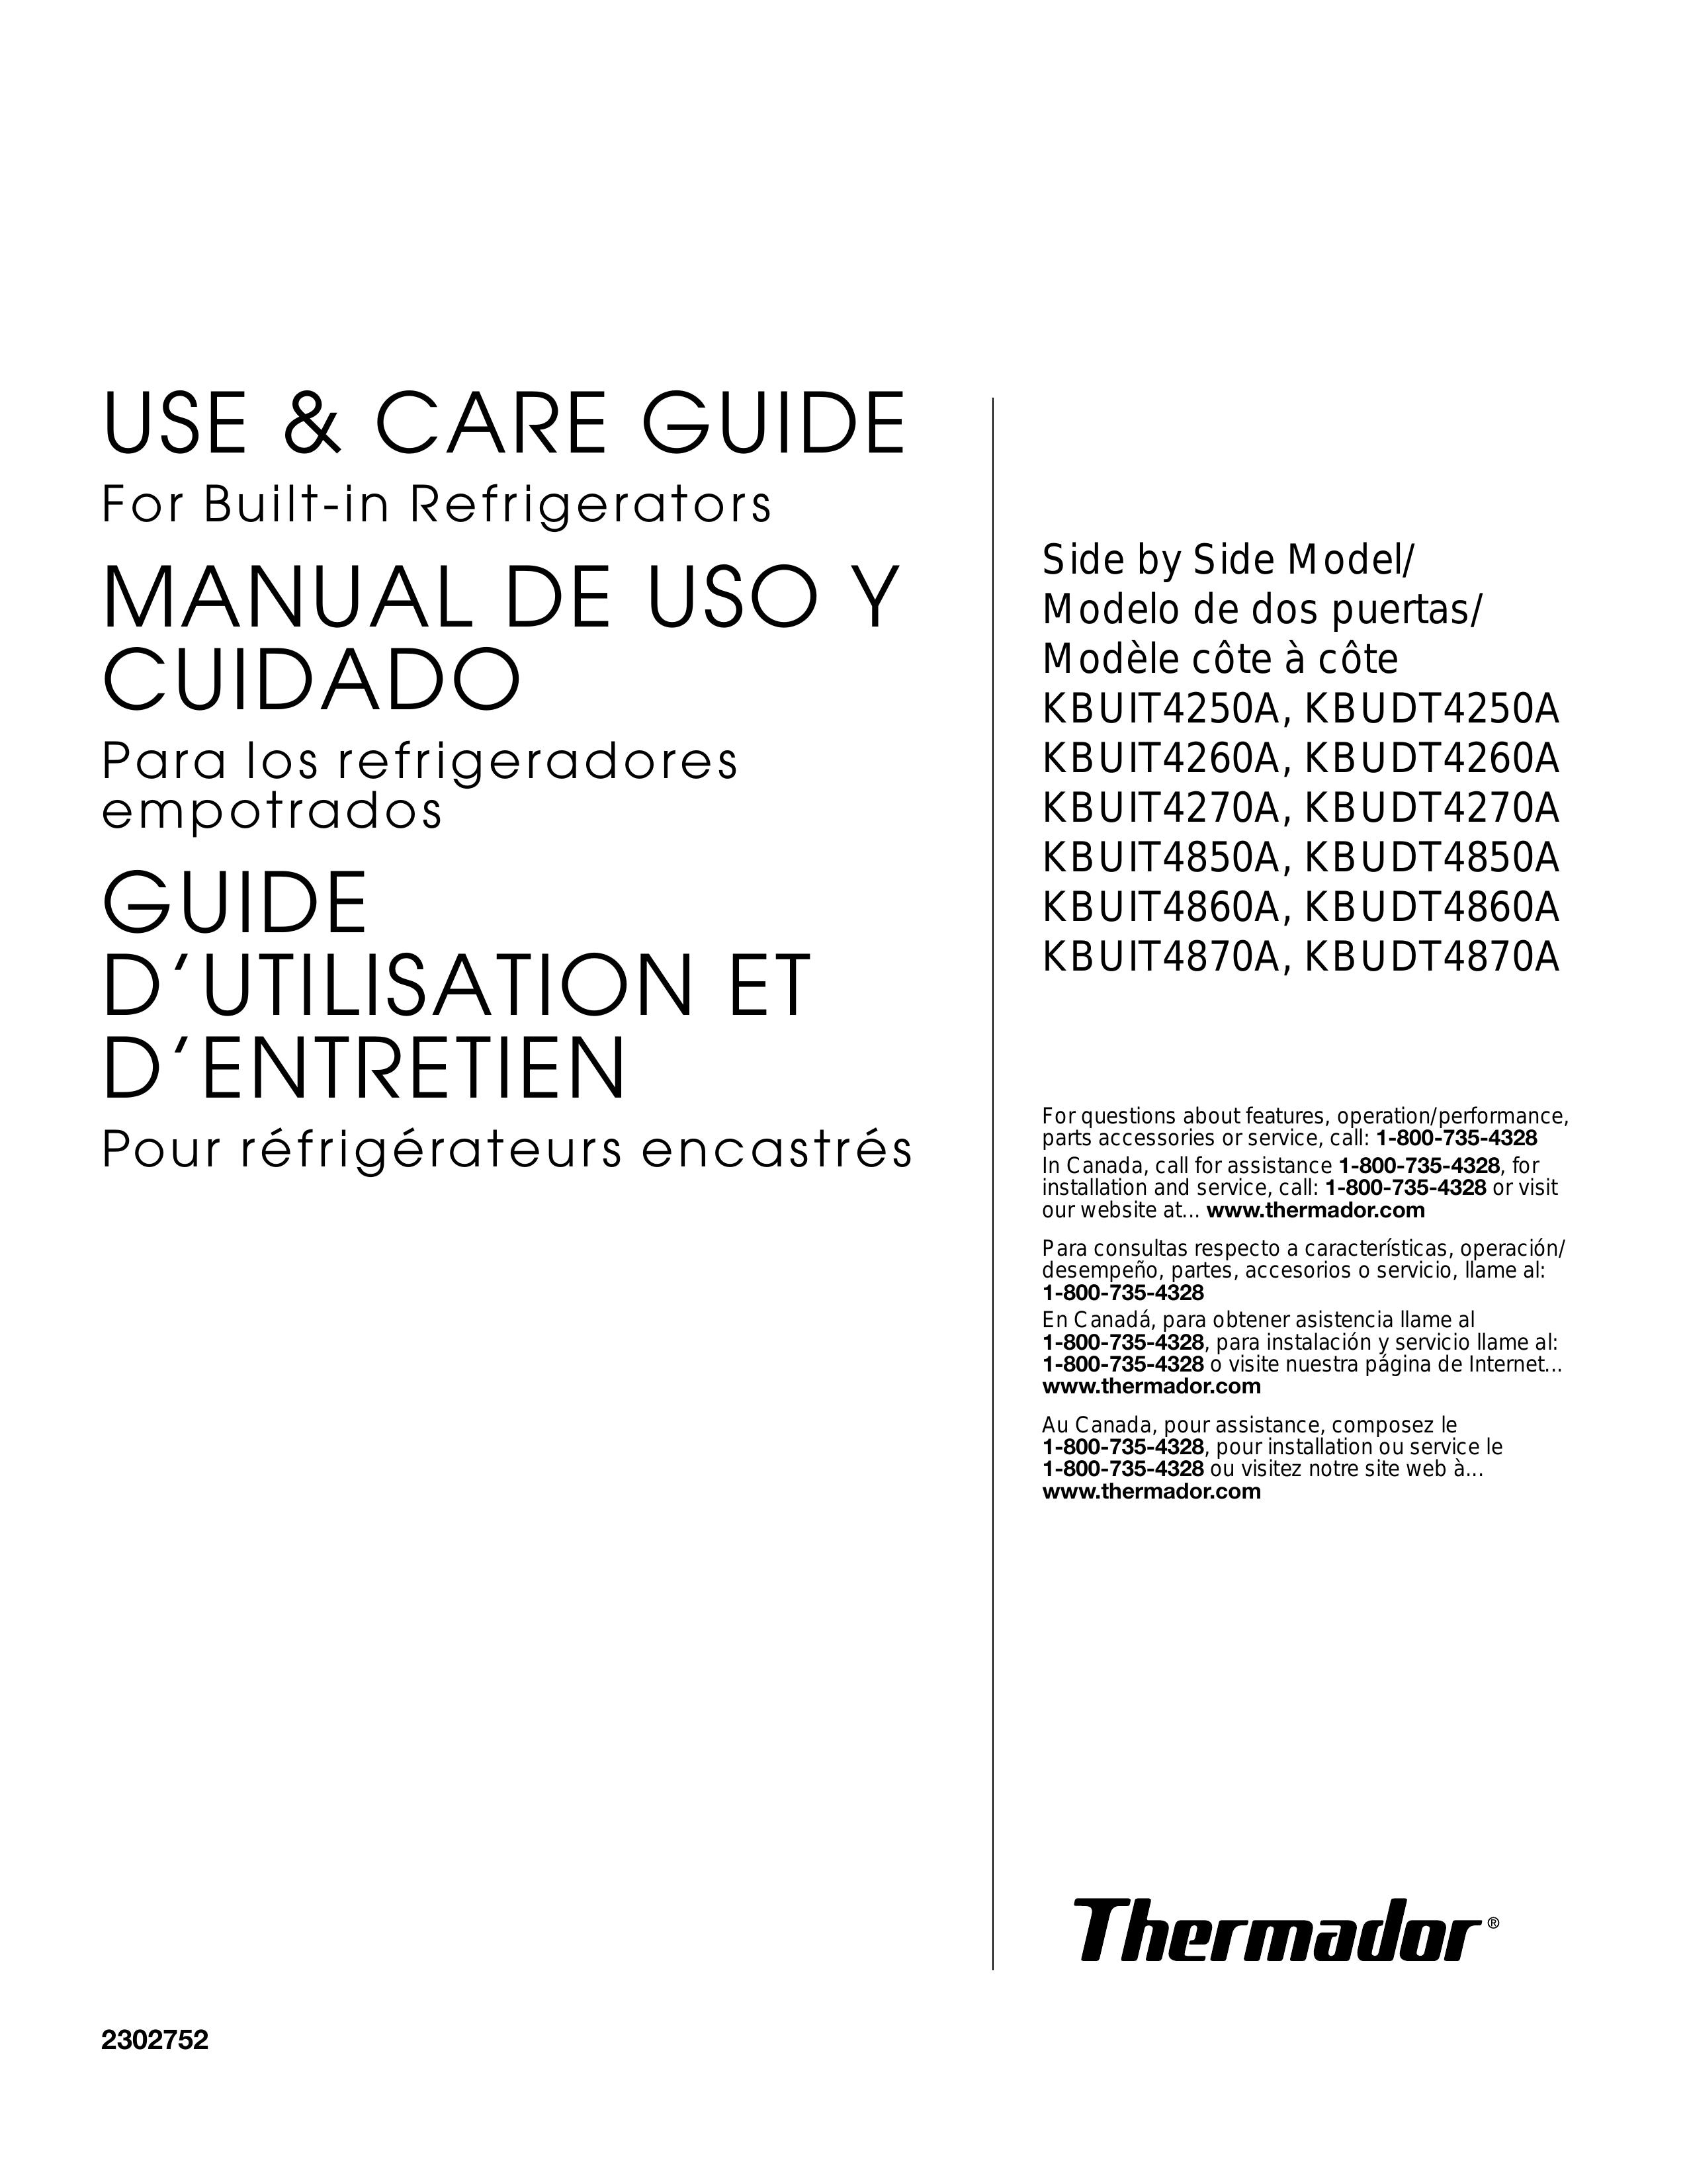 Thermador KBUIT4850A Refrigerator User Manual